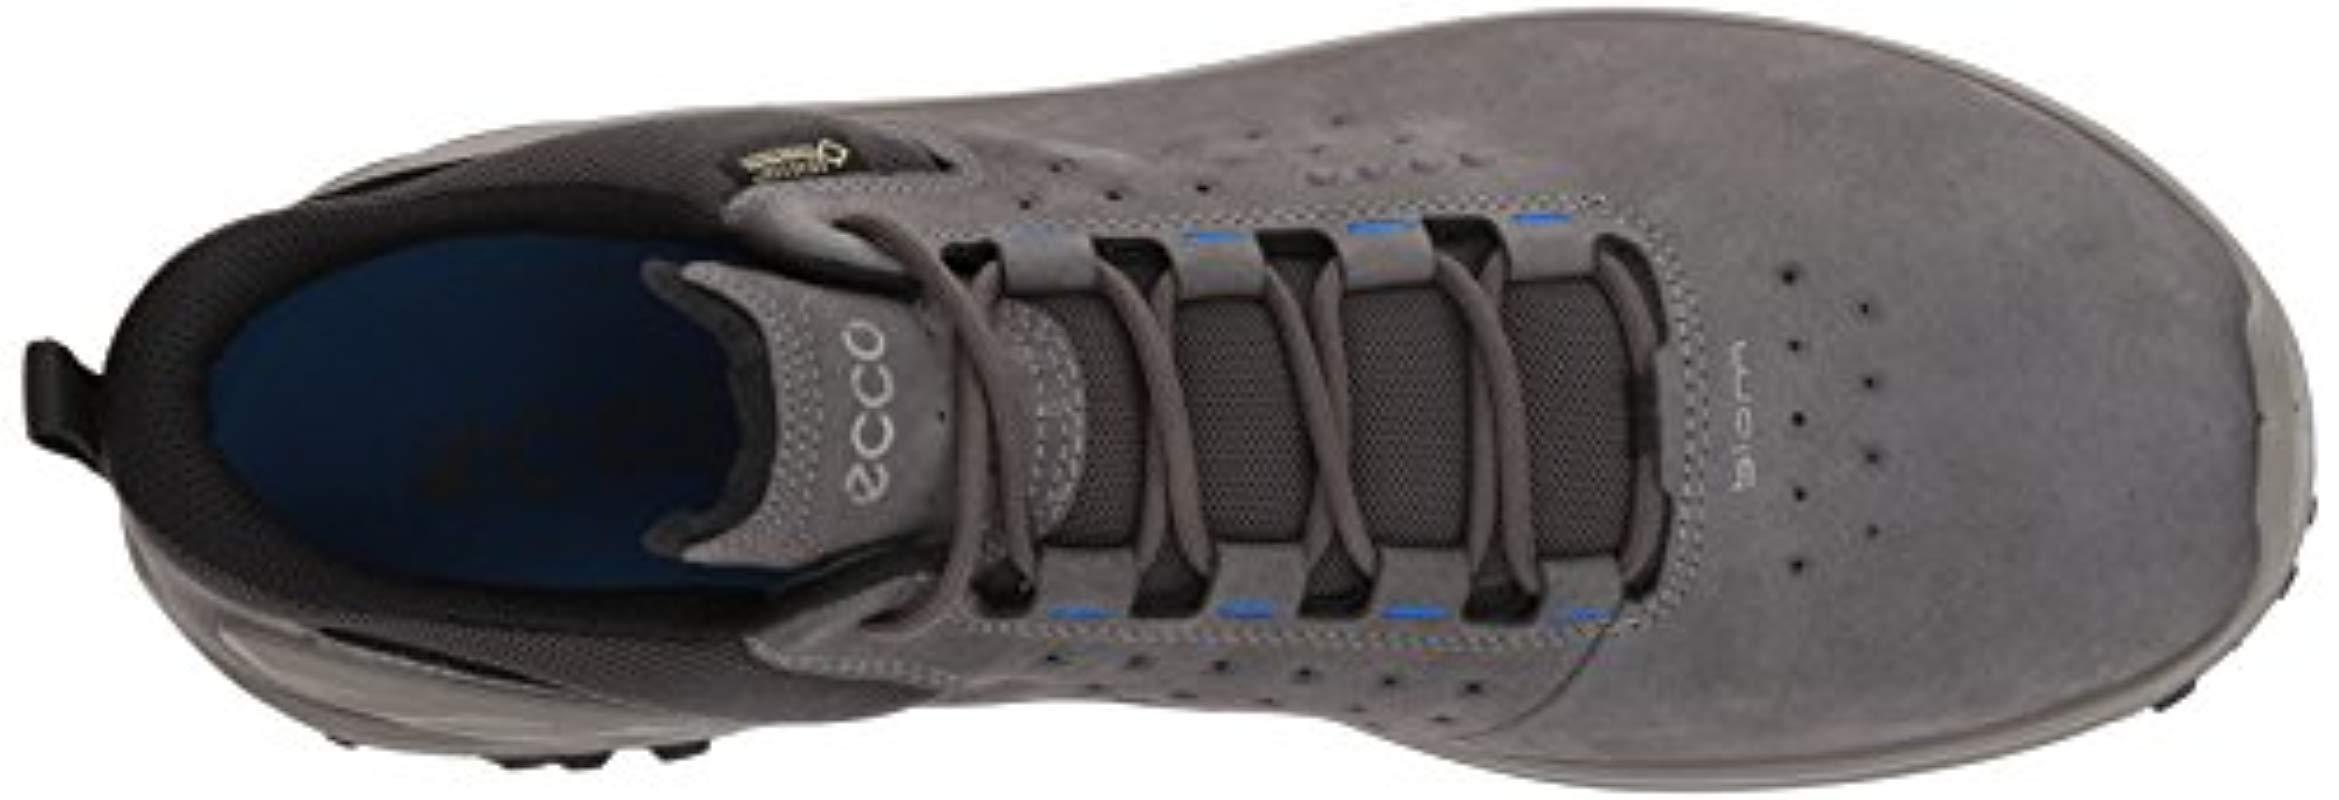 Ecco Biom Venture Leather Gore-tex Tie Hiking Shoe for Men | Lyst